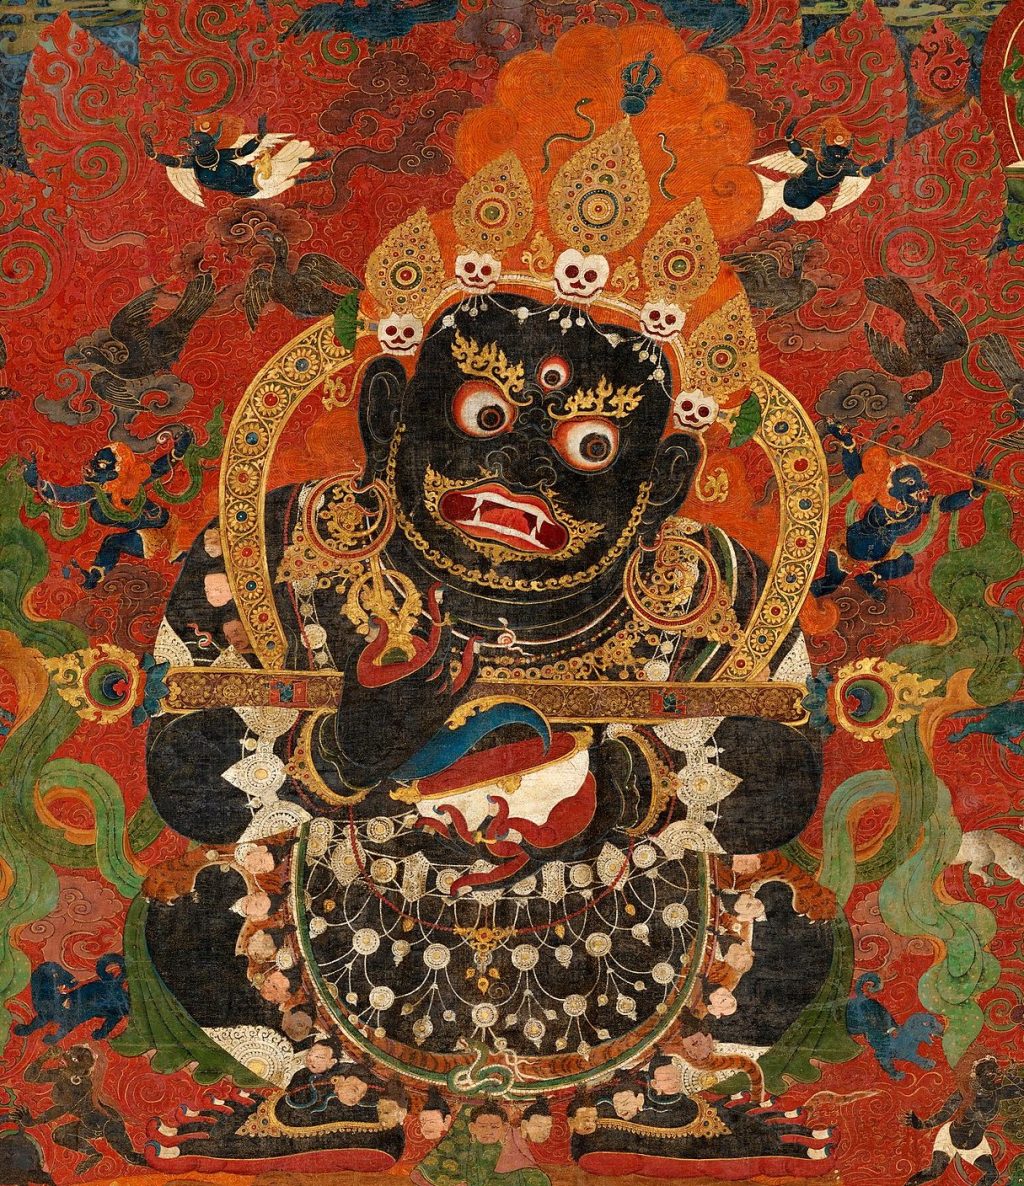 Tibetan thangka from AD 1500, Mahakala, Protector of the Tent, Central Tibet via Wikimedia Commons